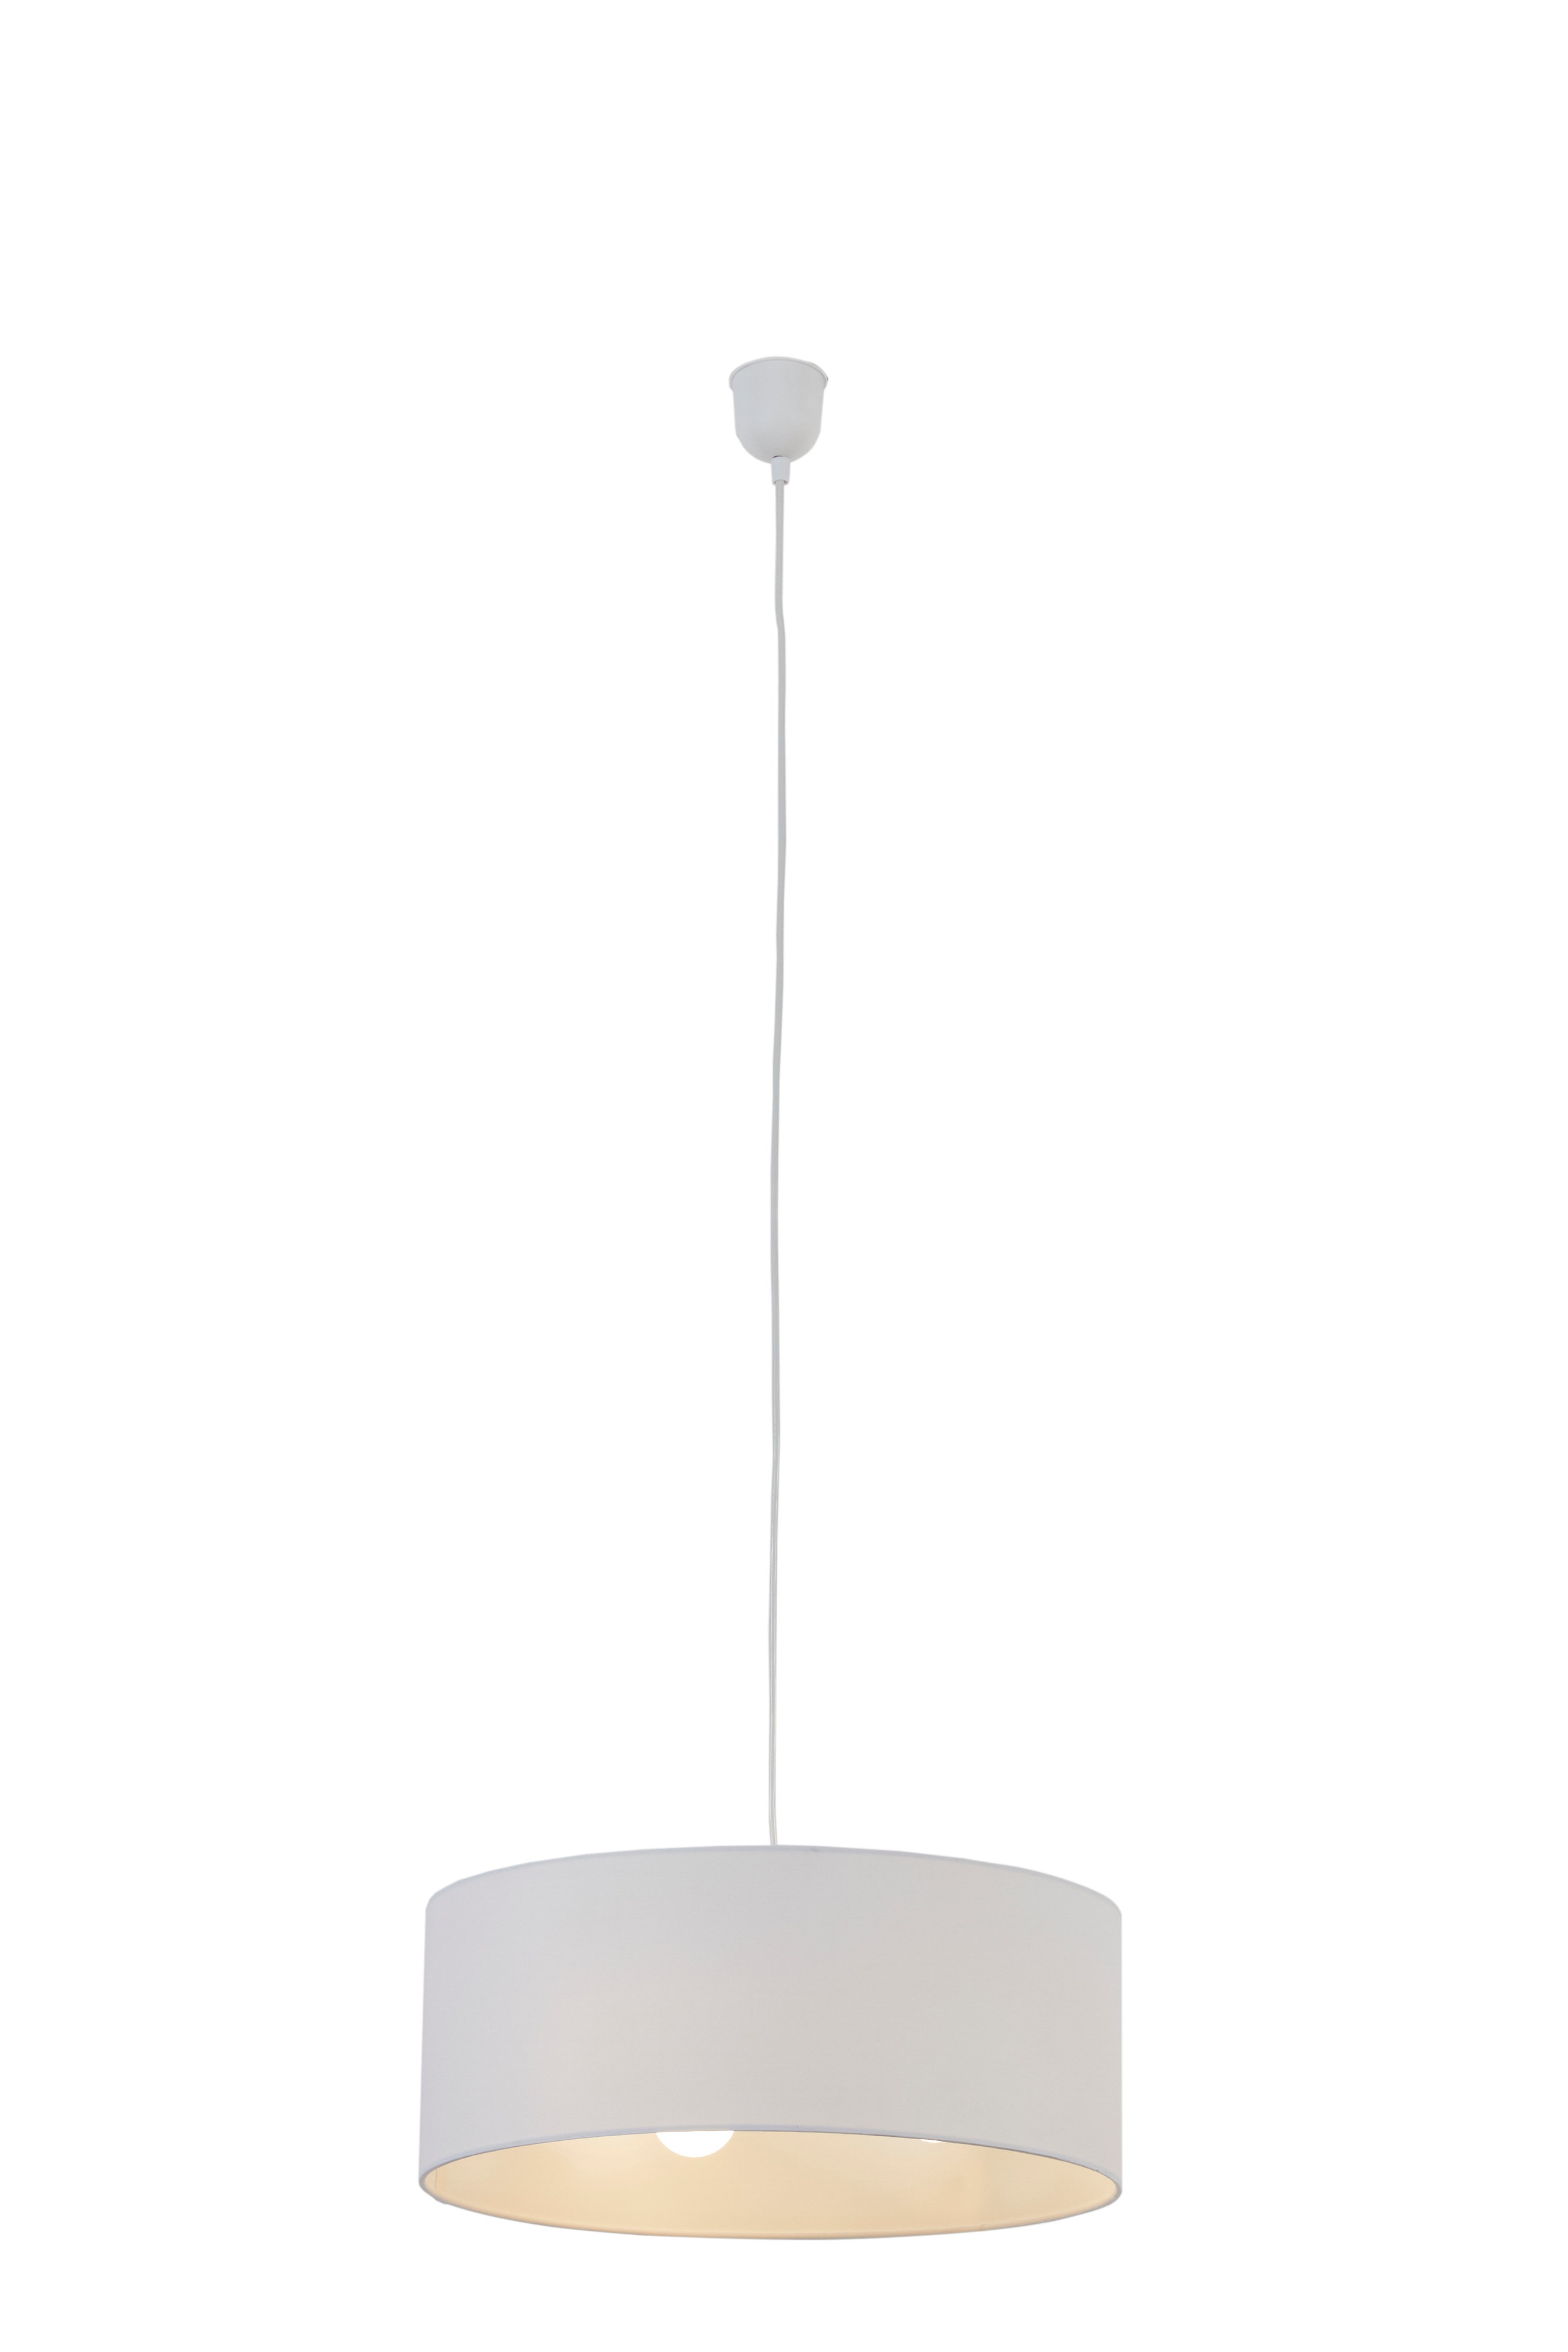 Lampadario Moderno Sitia bianco in tessuto, D. 48 cm, 3 luci, INSPIRE - 1